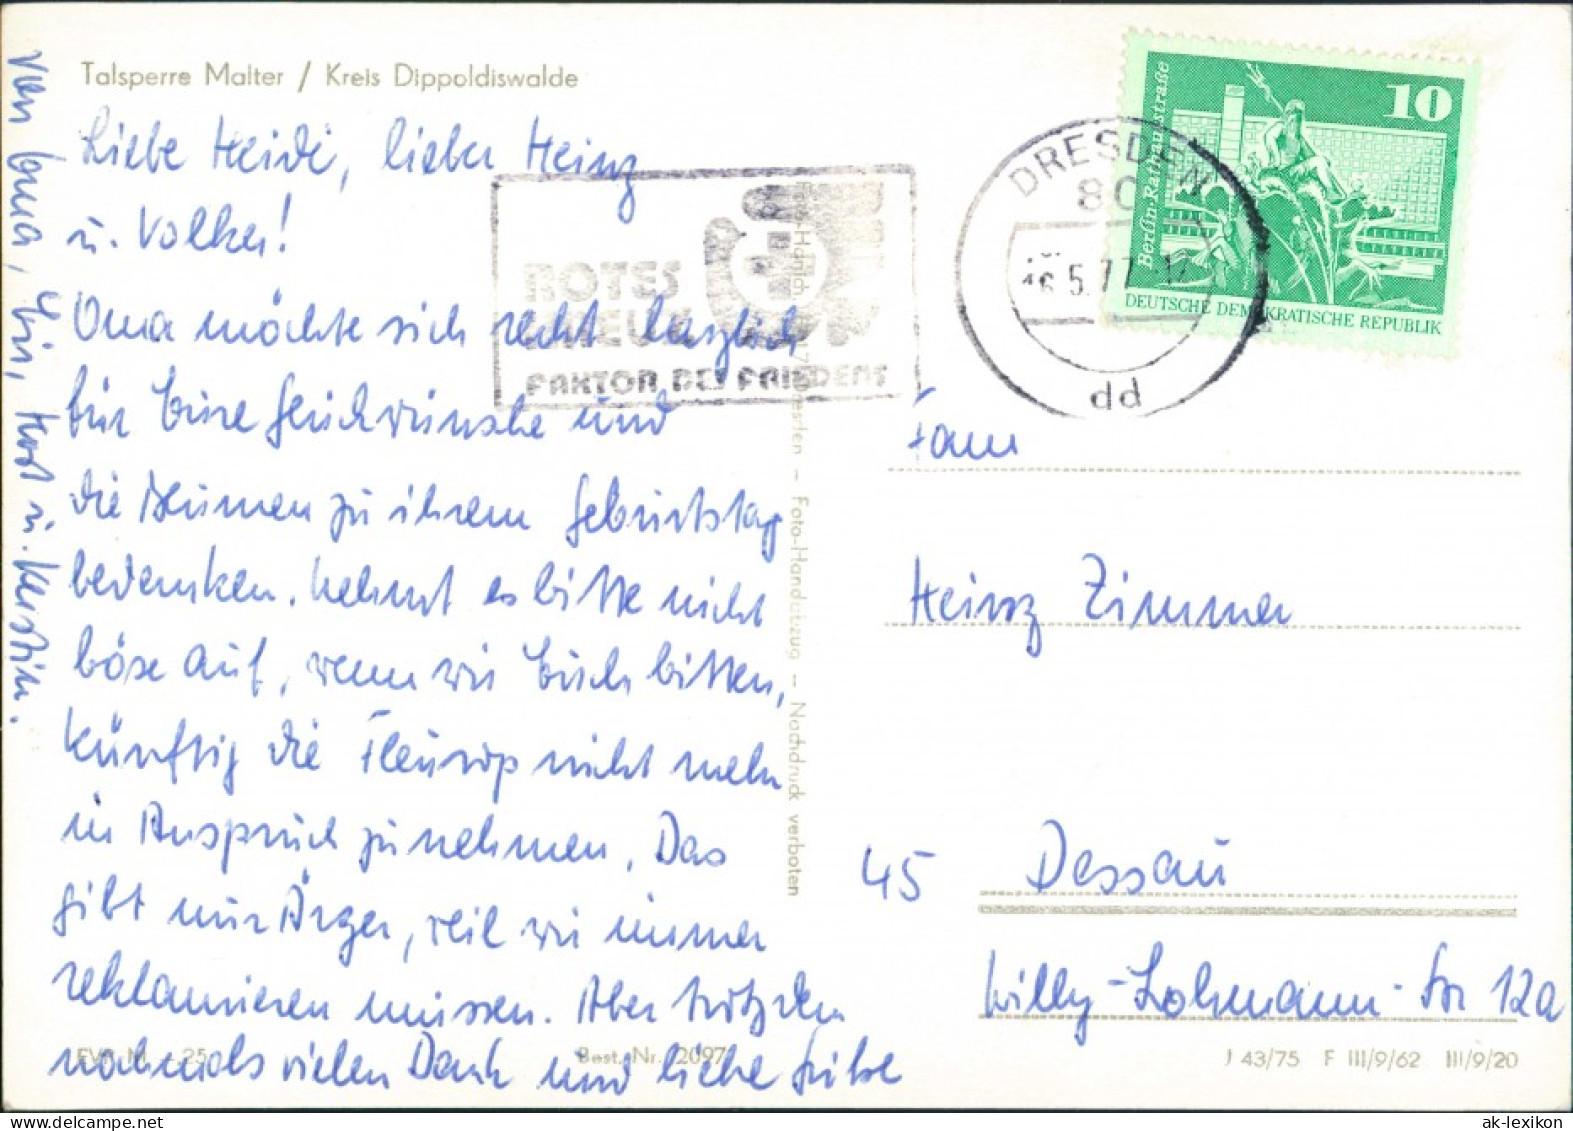 Dippoldiswalde Talsperre Malter, Strand Partie, DDR Postkarte 1977/1975 - Dippoldiswalde